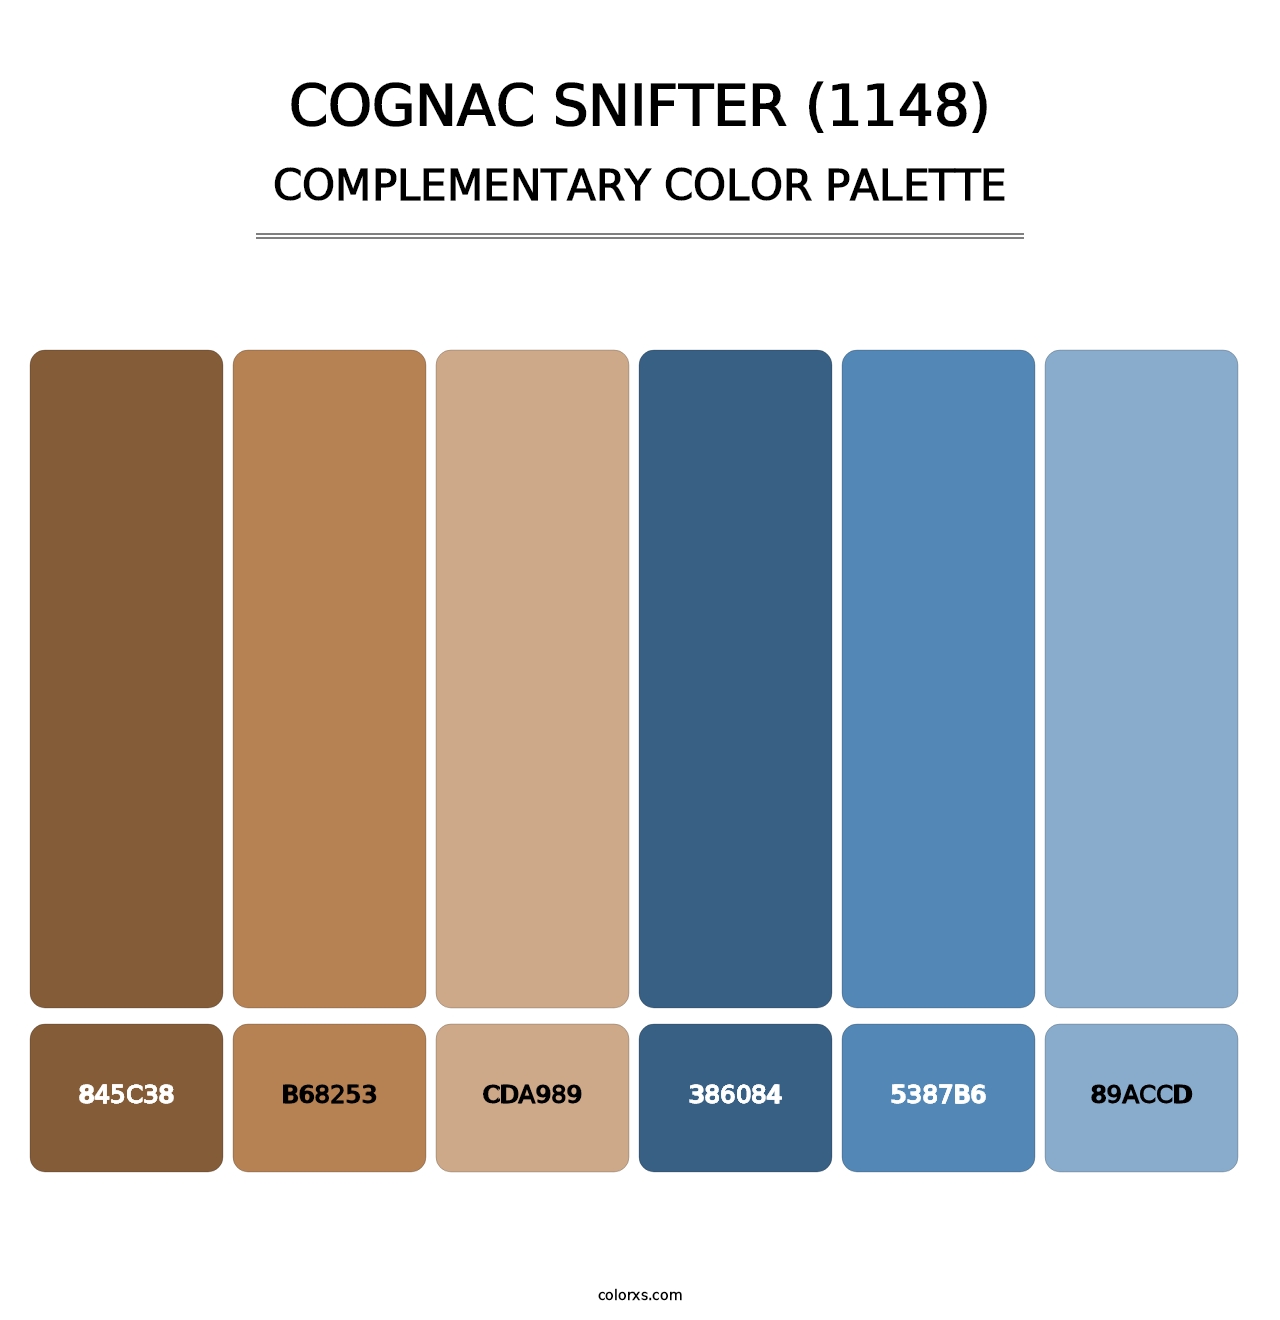 Cognac Snifter (1148) - Complementary Color Palette